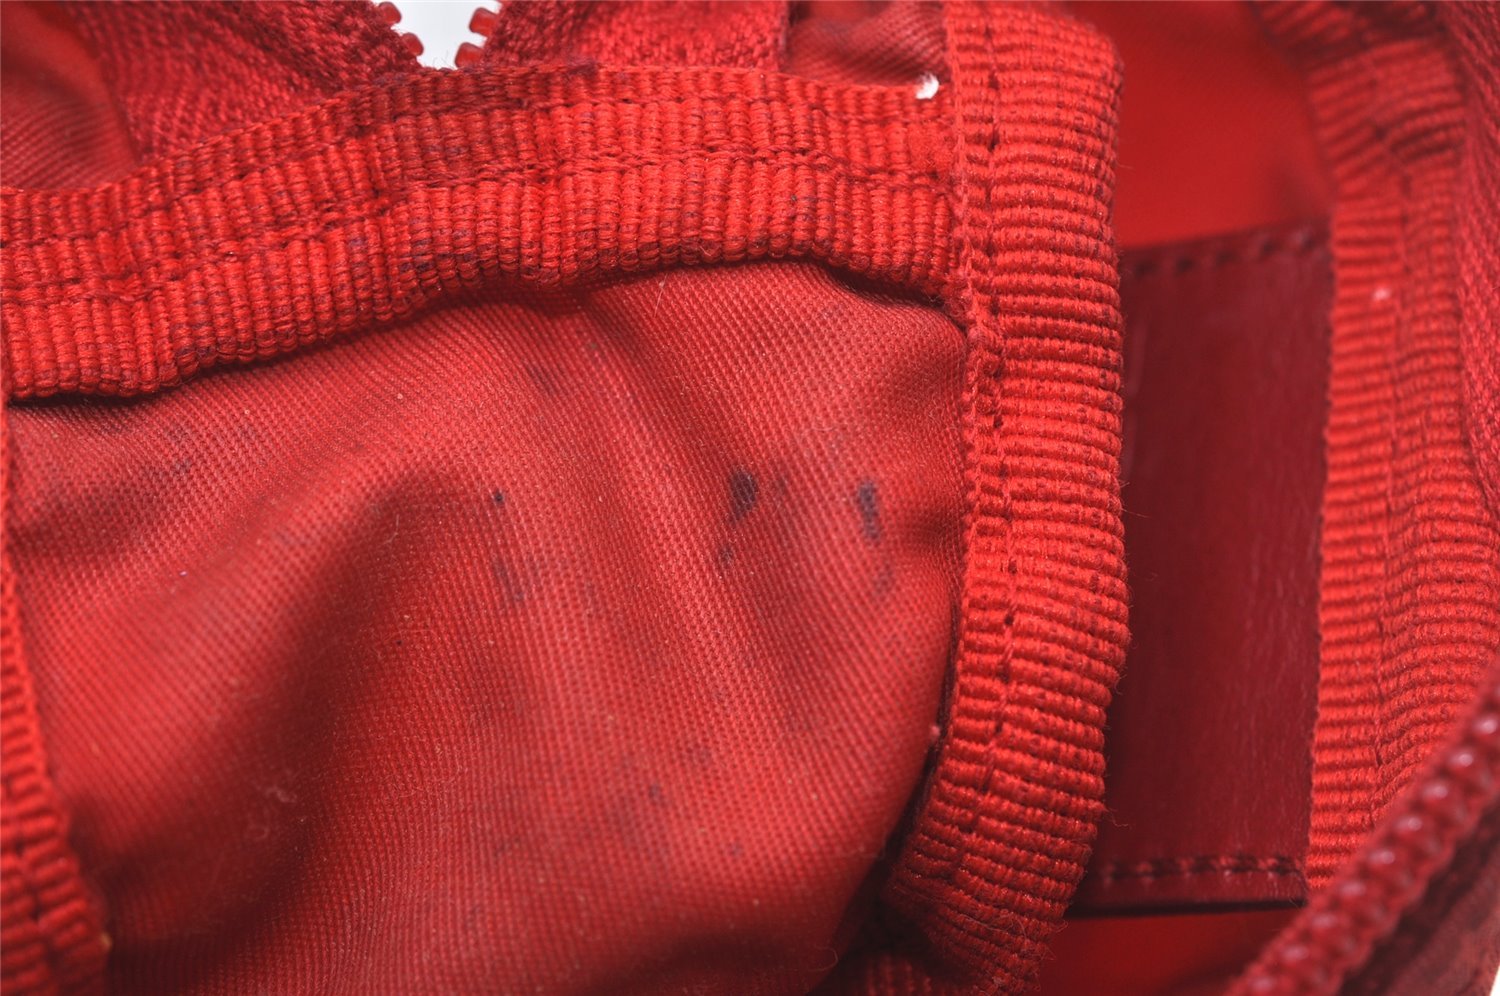 Authentic PRADA Vintage Nylon Tessuto Leather Pouch Purse Red 5596I